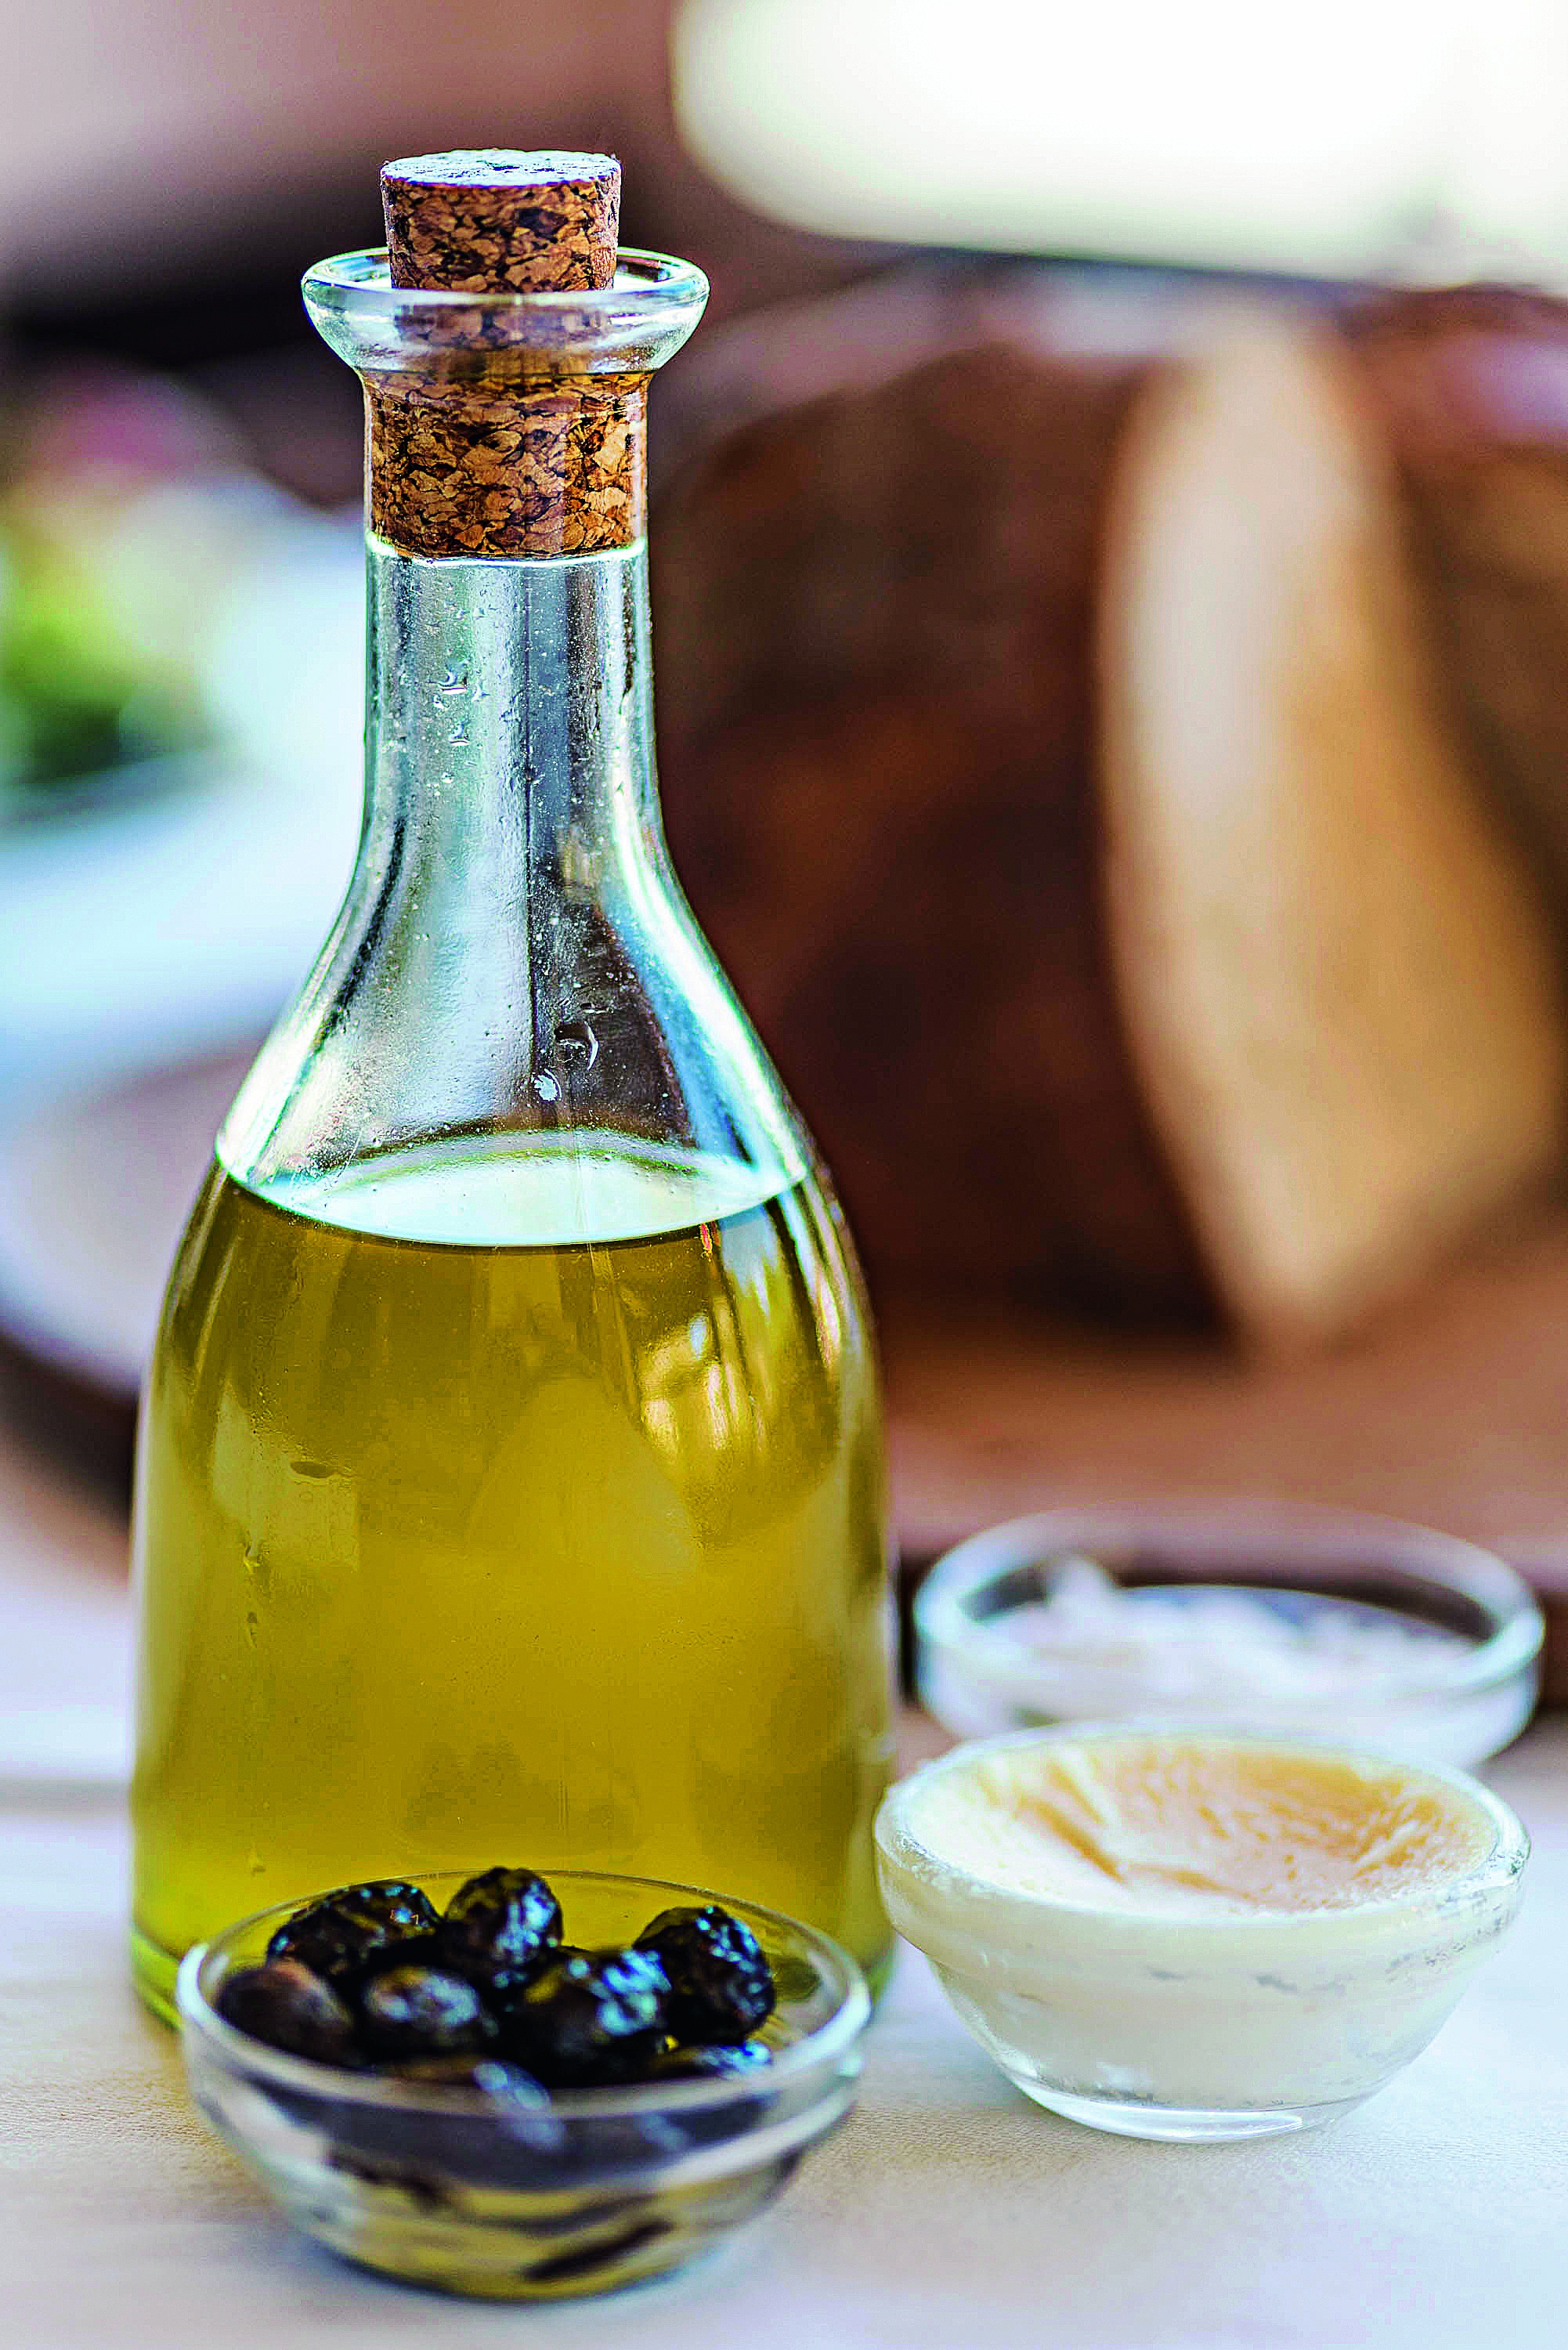 Chania Crete Chrisostomos Restaurant Agourelo Olive Oil Fresh Olive Oil 0594